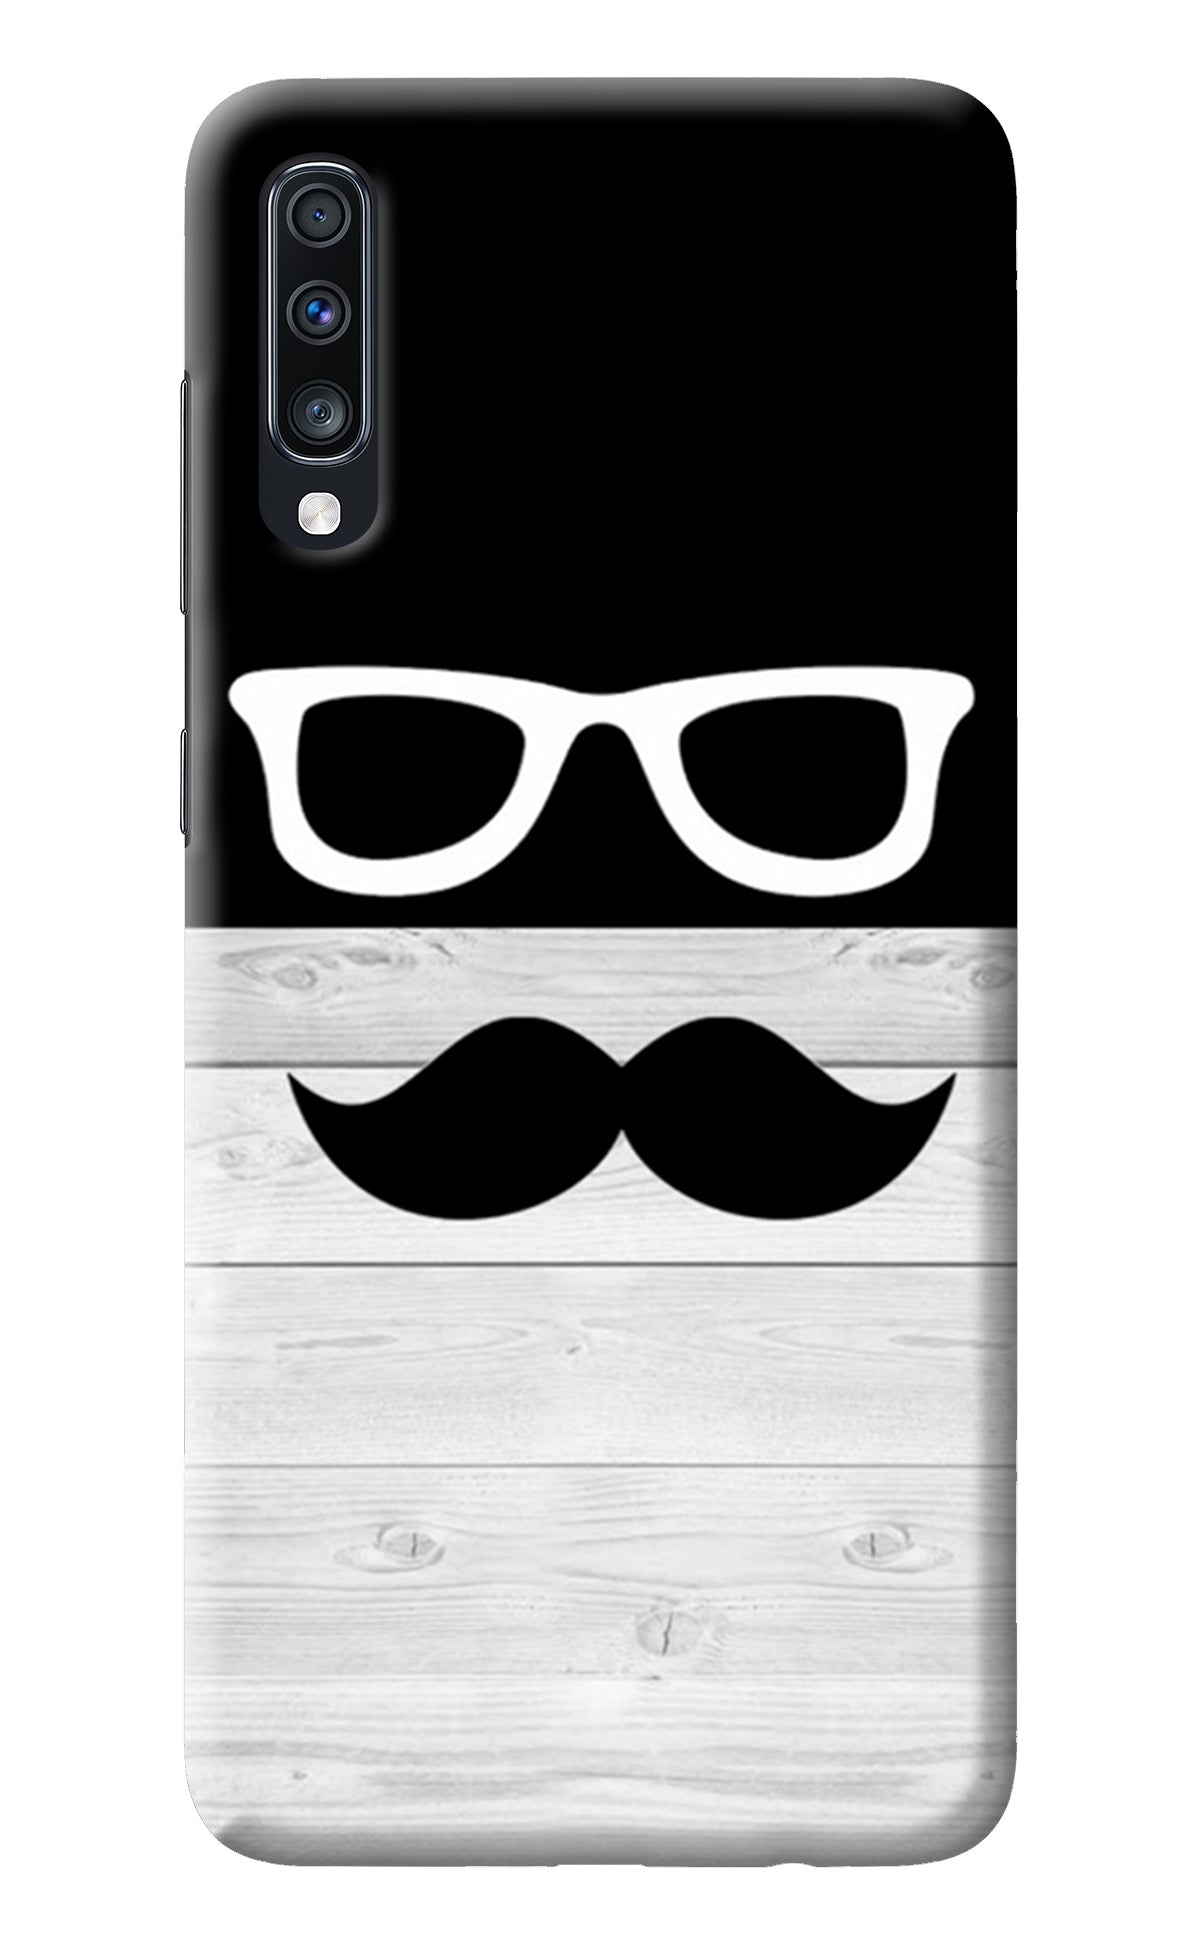 Mustache Samsung A70 Back Cover